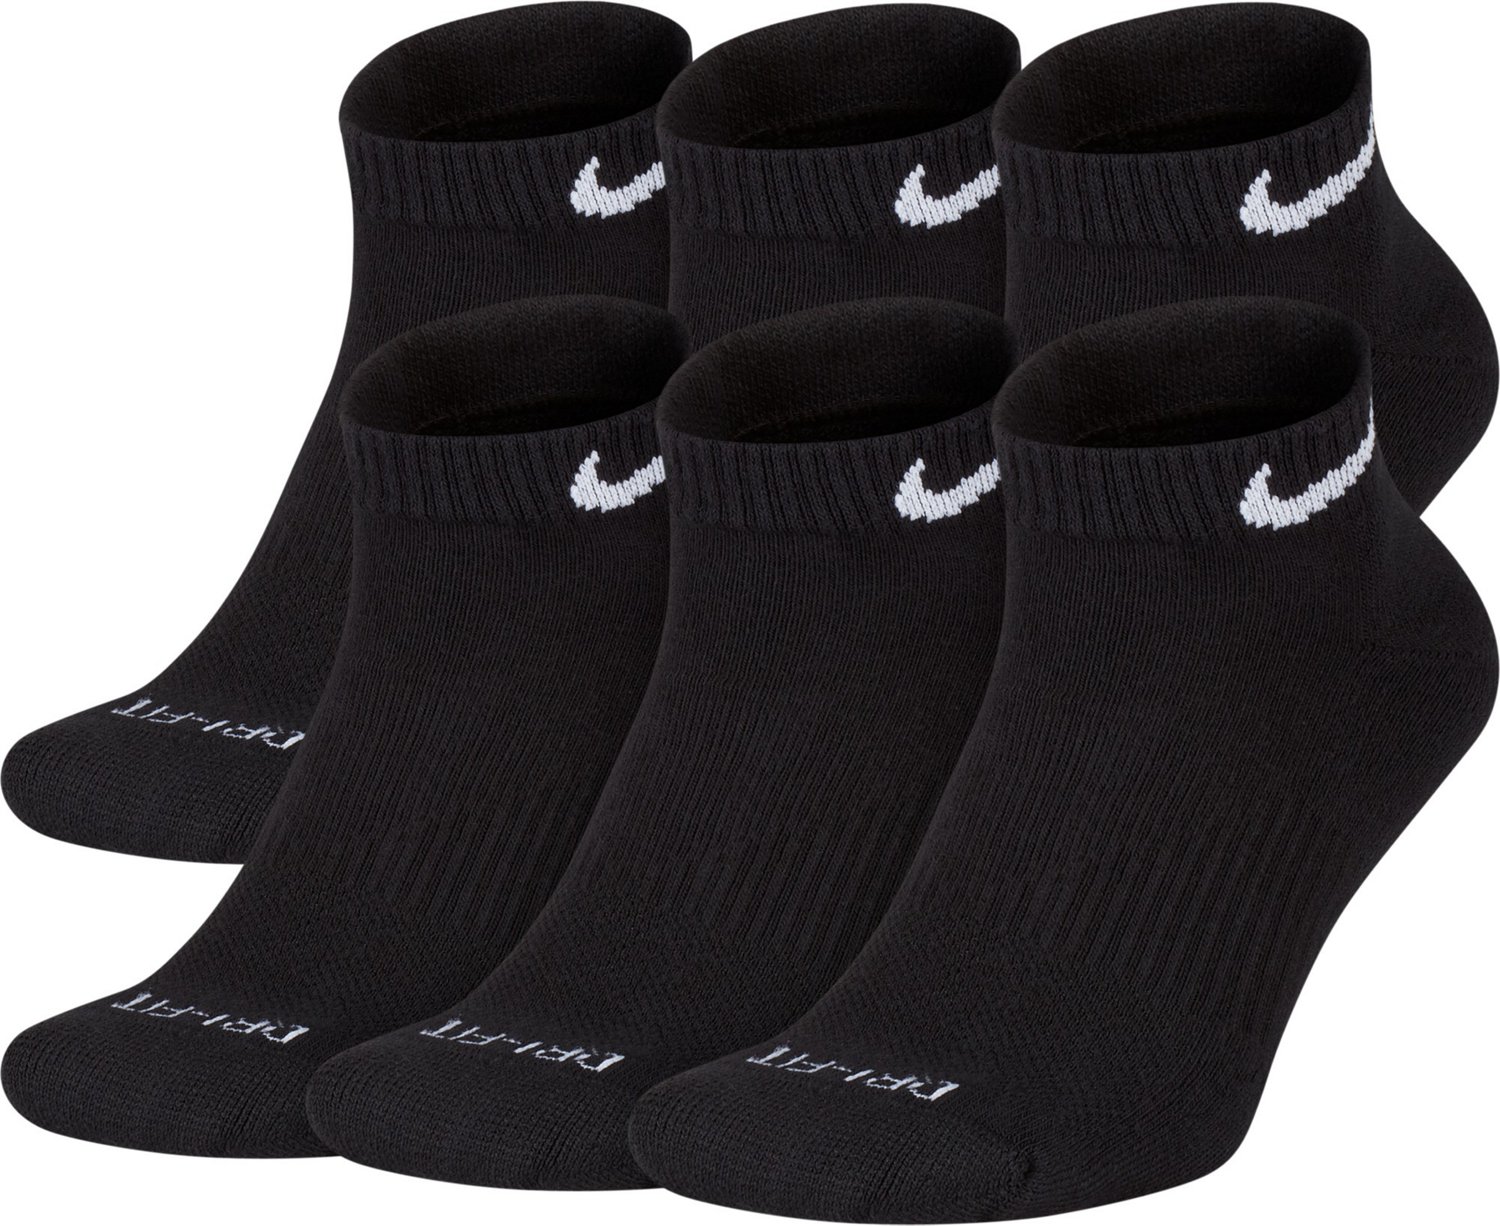 Nike Everyday Plus Cushion Training Low Cut Socks 6 Pack | Academy